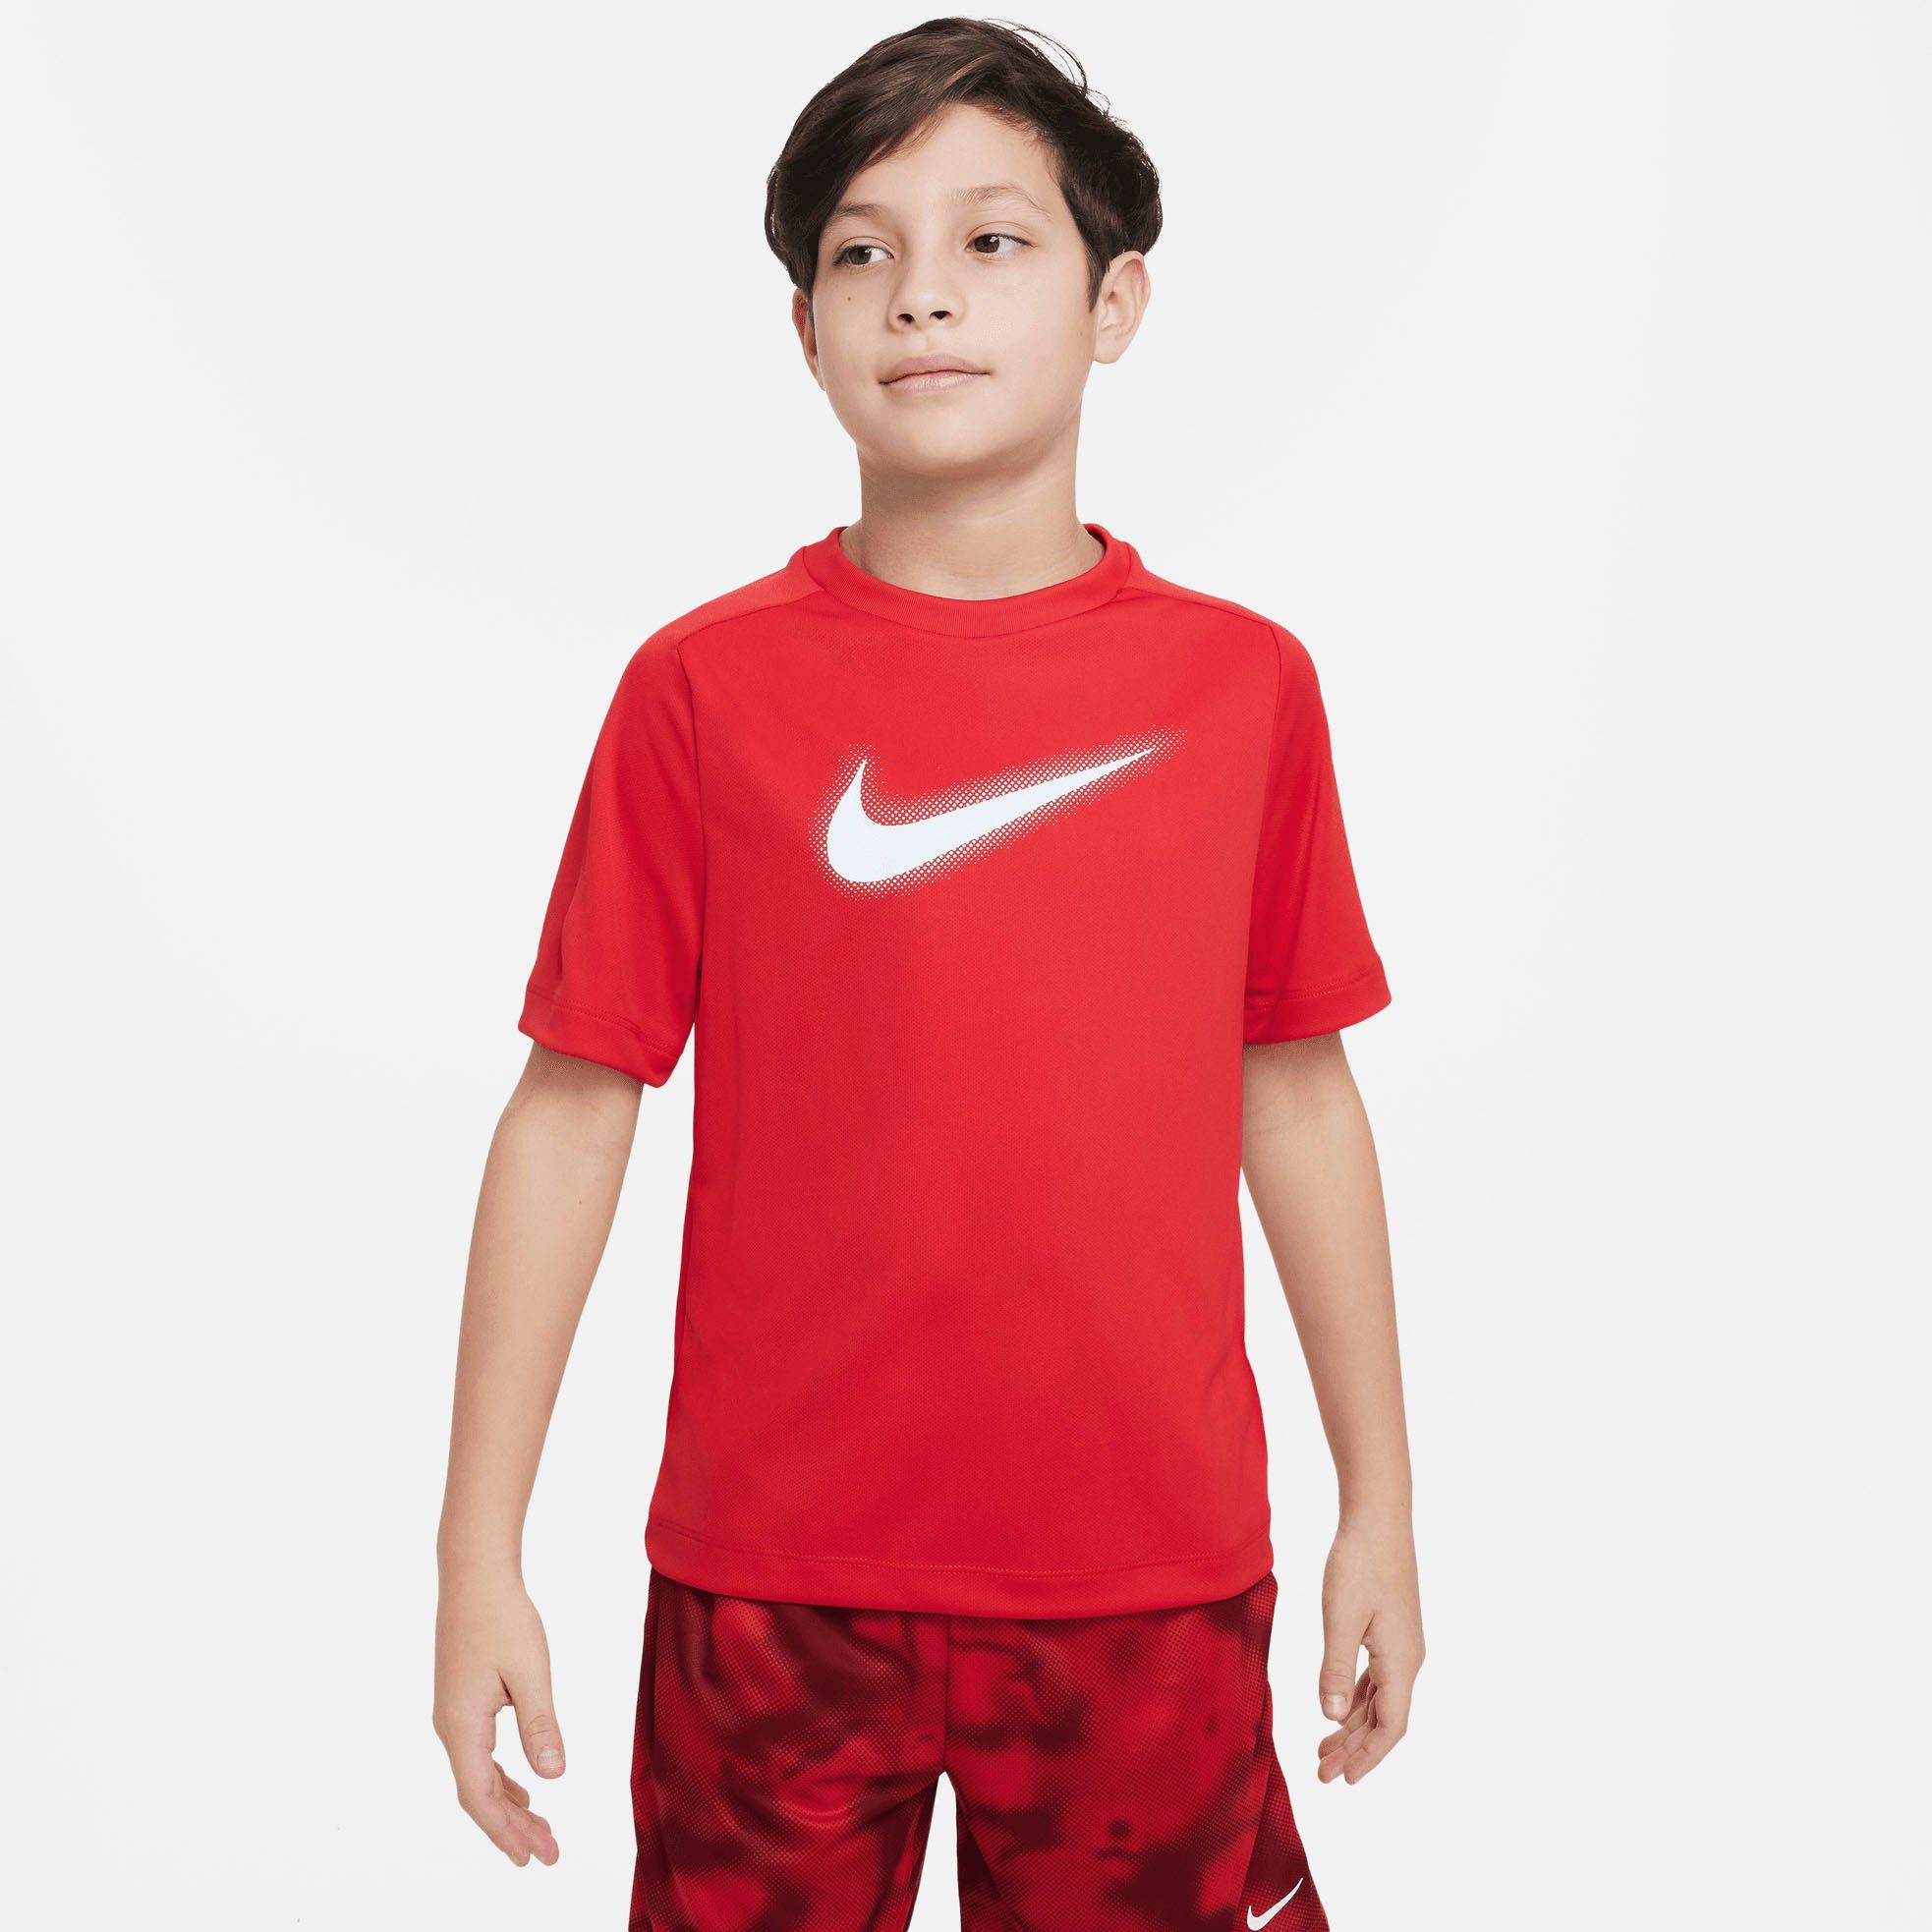 TRAINING BIG Nike TOP MULTI+ KIDS' Trainingsshirt rot DRI-FIT (BOYS) GRAPHIC